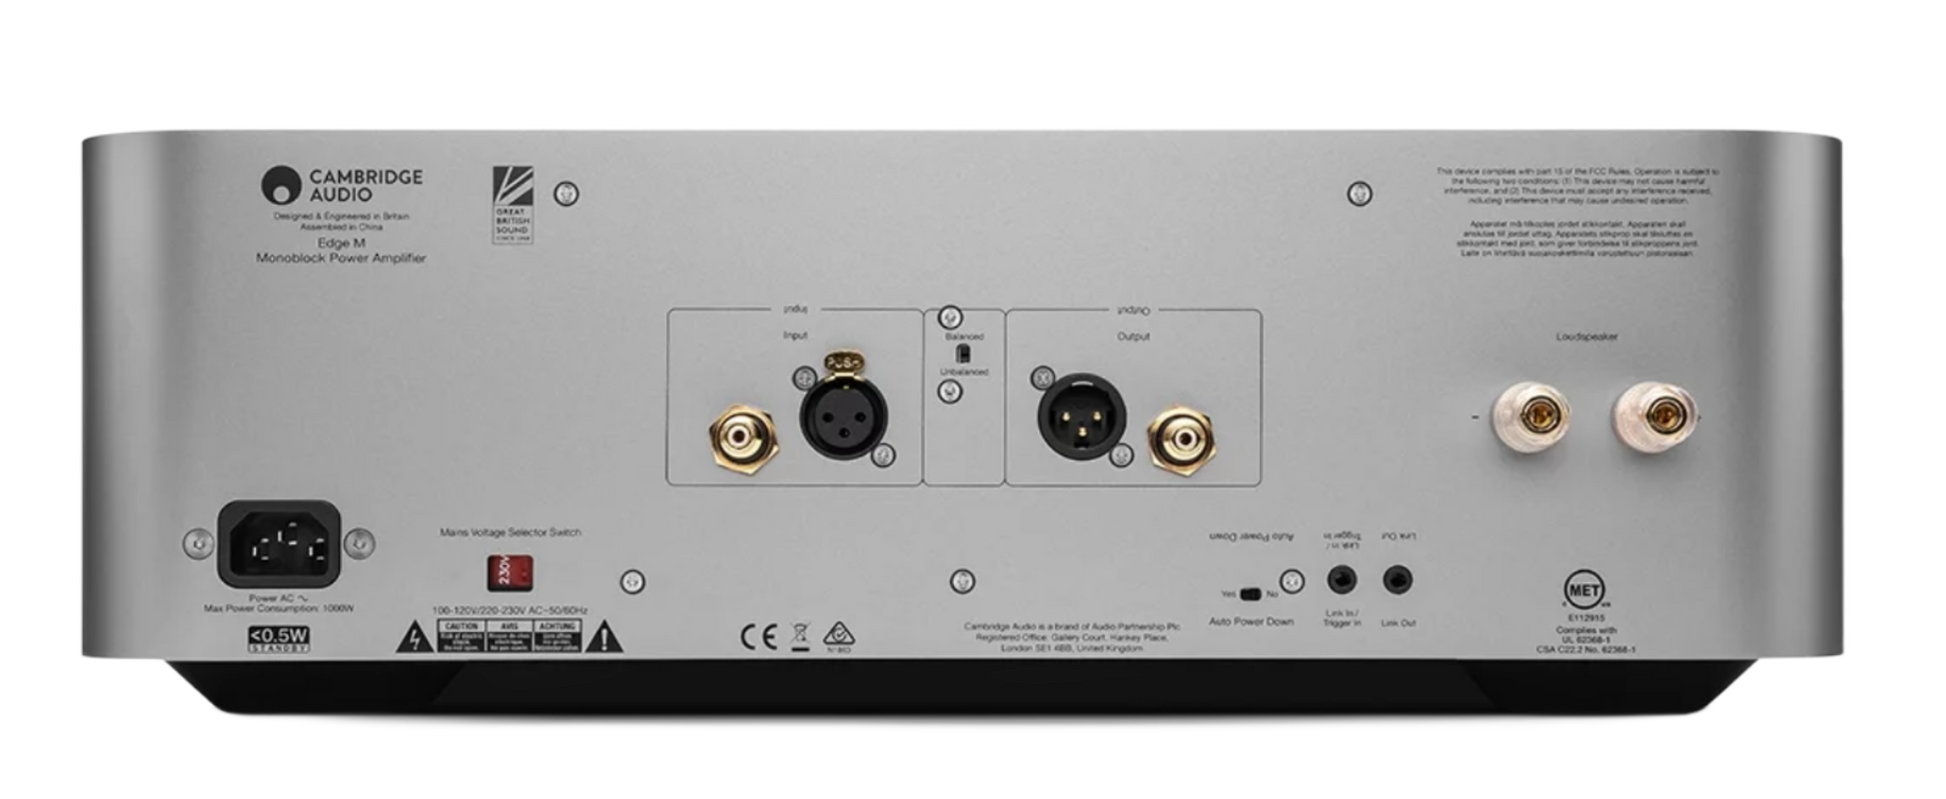 Cambridge Audio Power Amplifiers Cambridge Audio Edge M Monoblock Power Amplifier, back